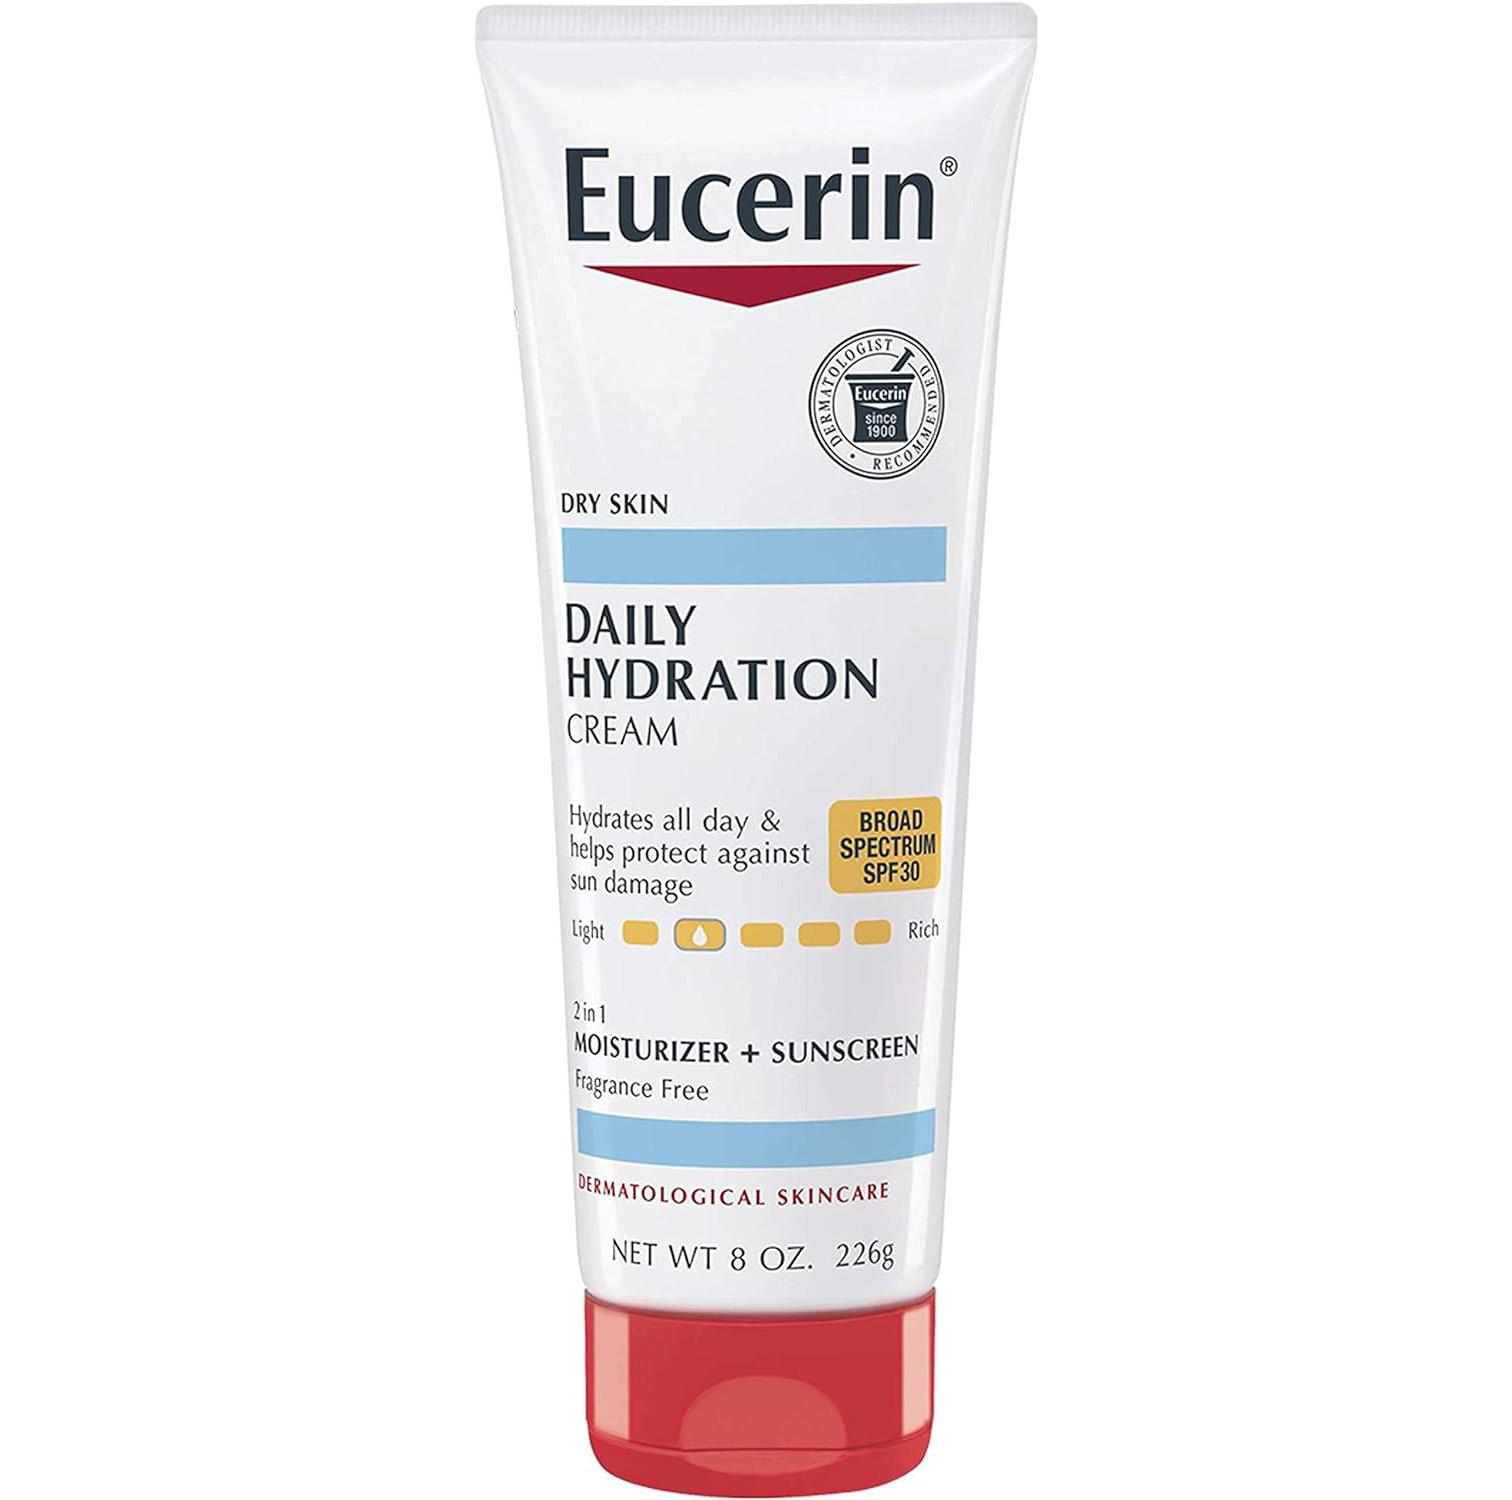 Eucerin Daily Hydration Broad Spectrum SPF 30 Sunscreen Body Cream for $4.19